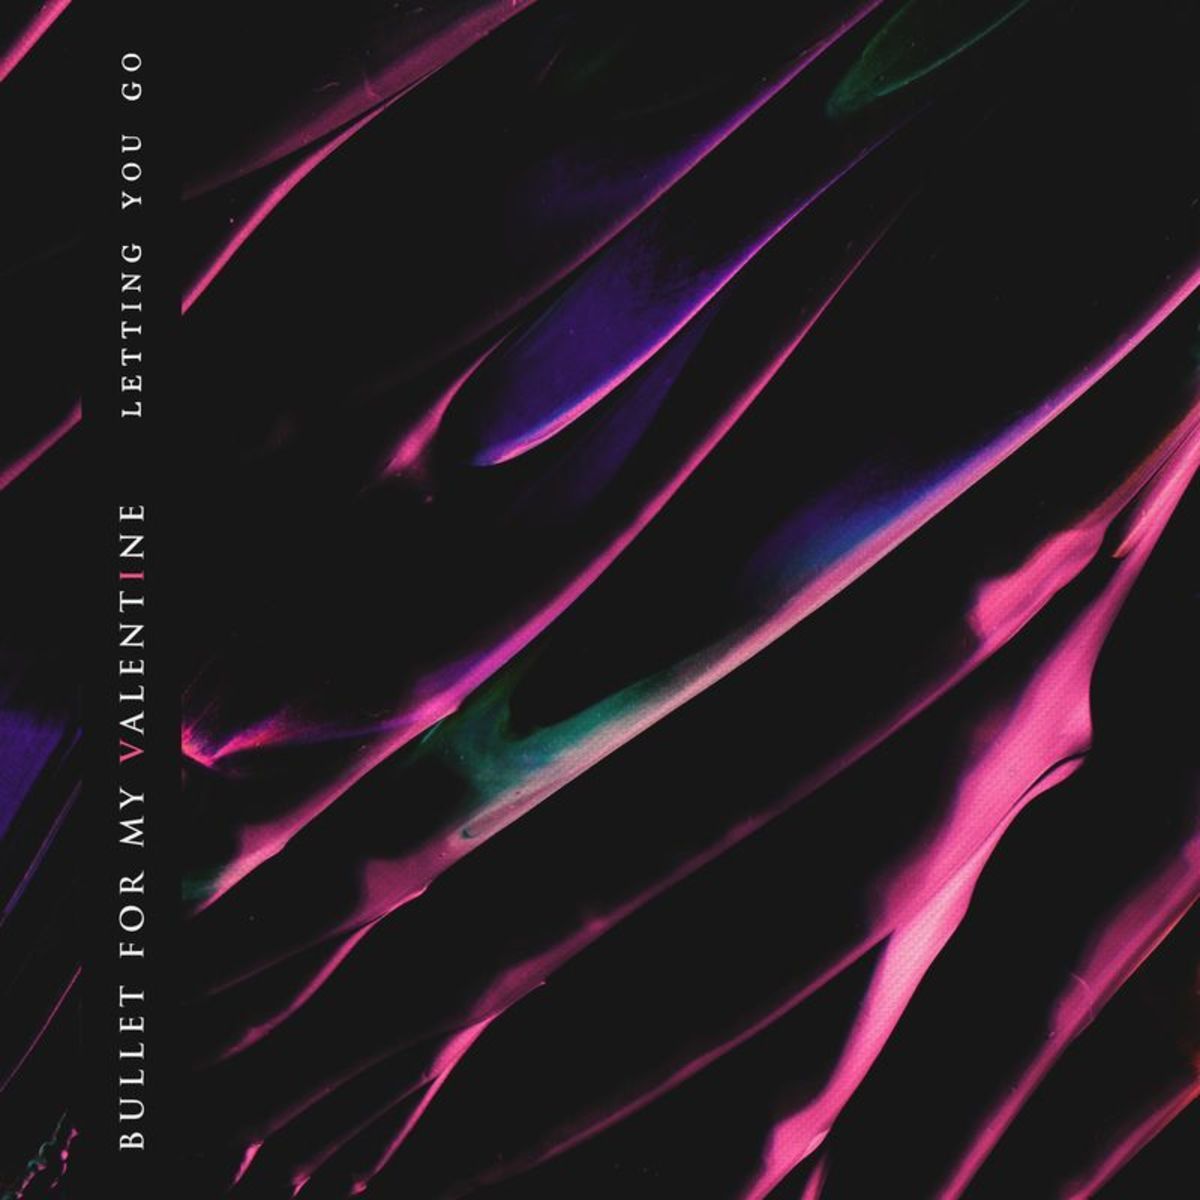 Bullet For My Valentine - Letting You Go [Single] (2018) Album Info